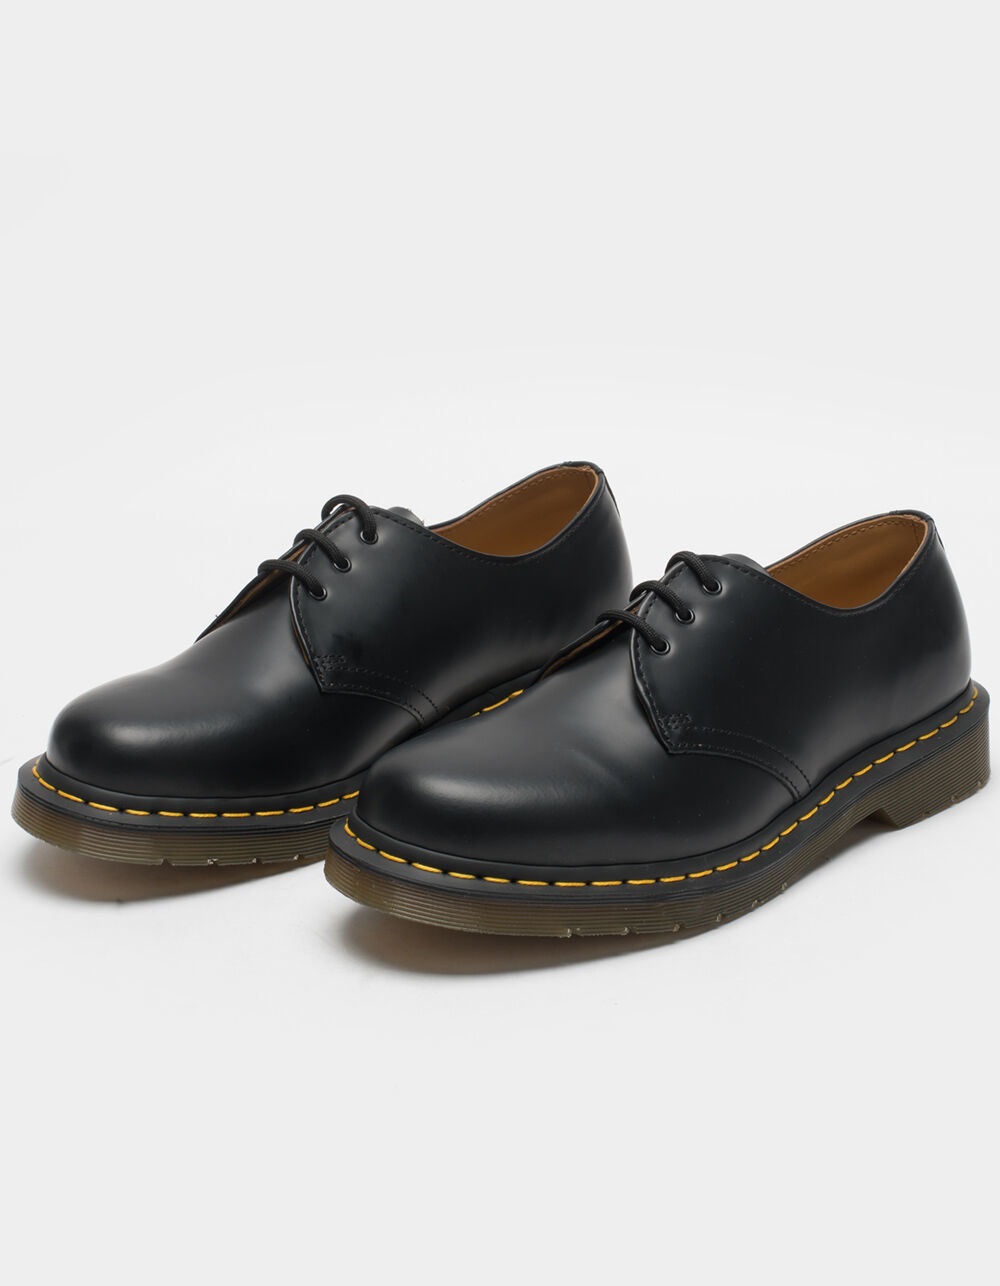 DR. MARTENS 1461 Smooth Leather Mens Oxford Shoes - BLACK | Tillys